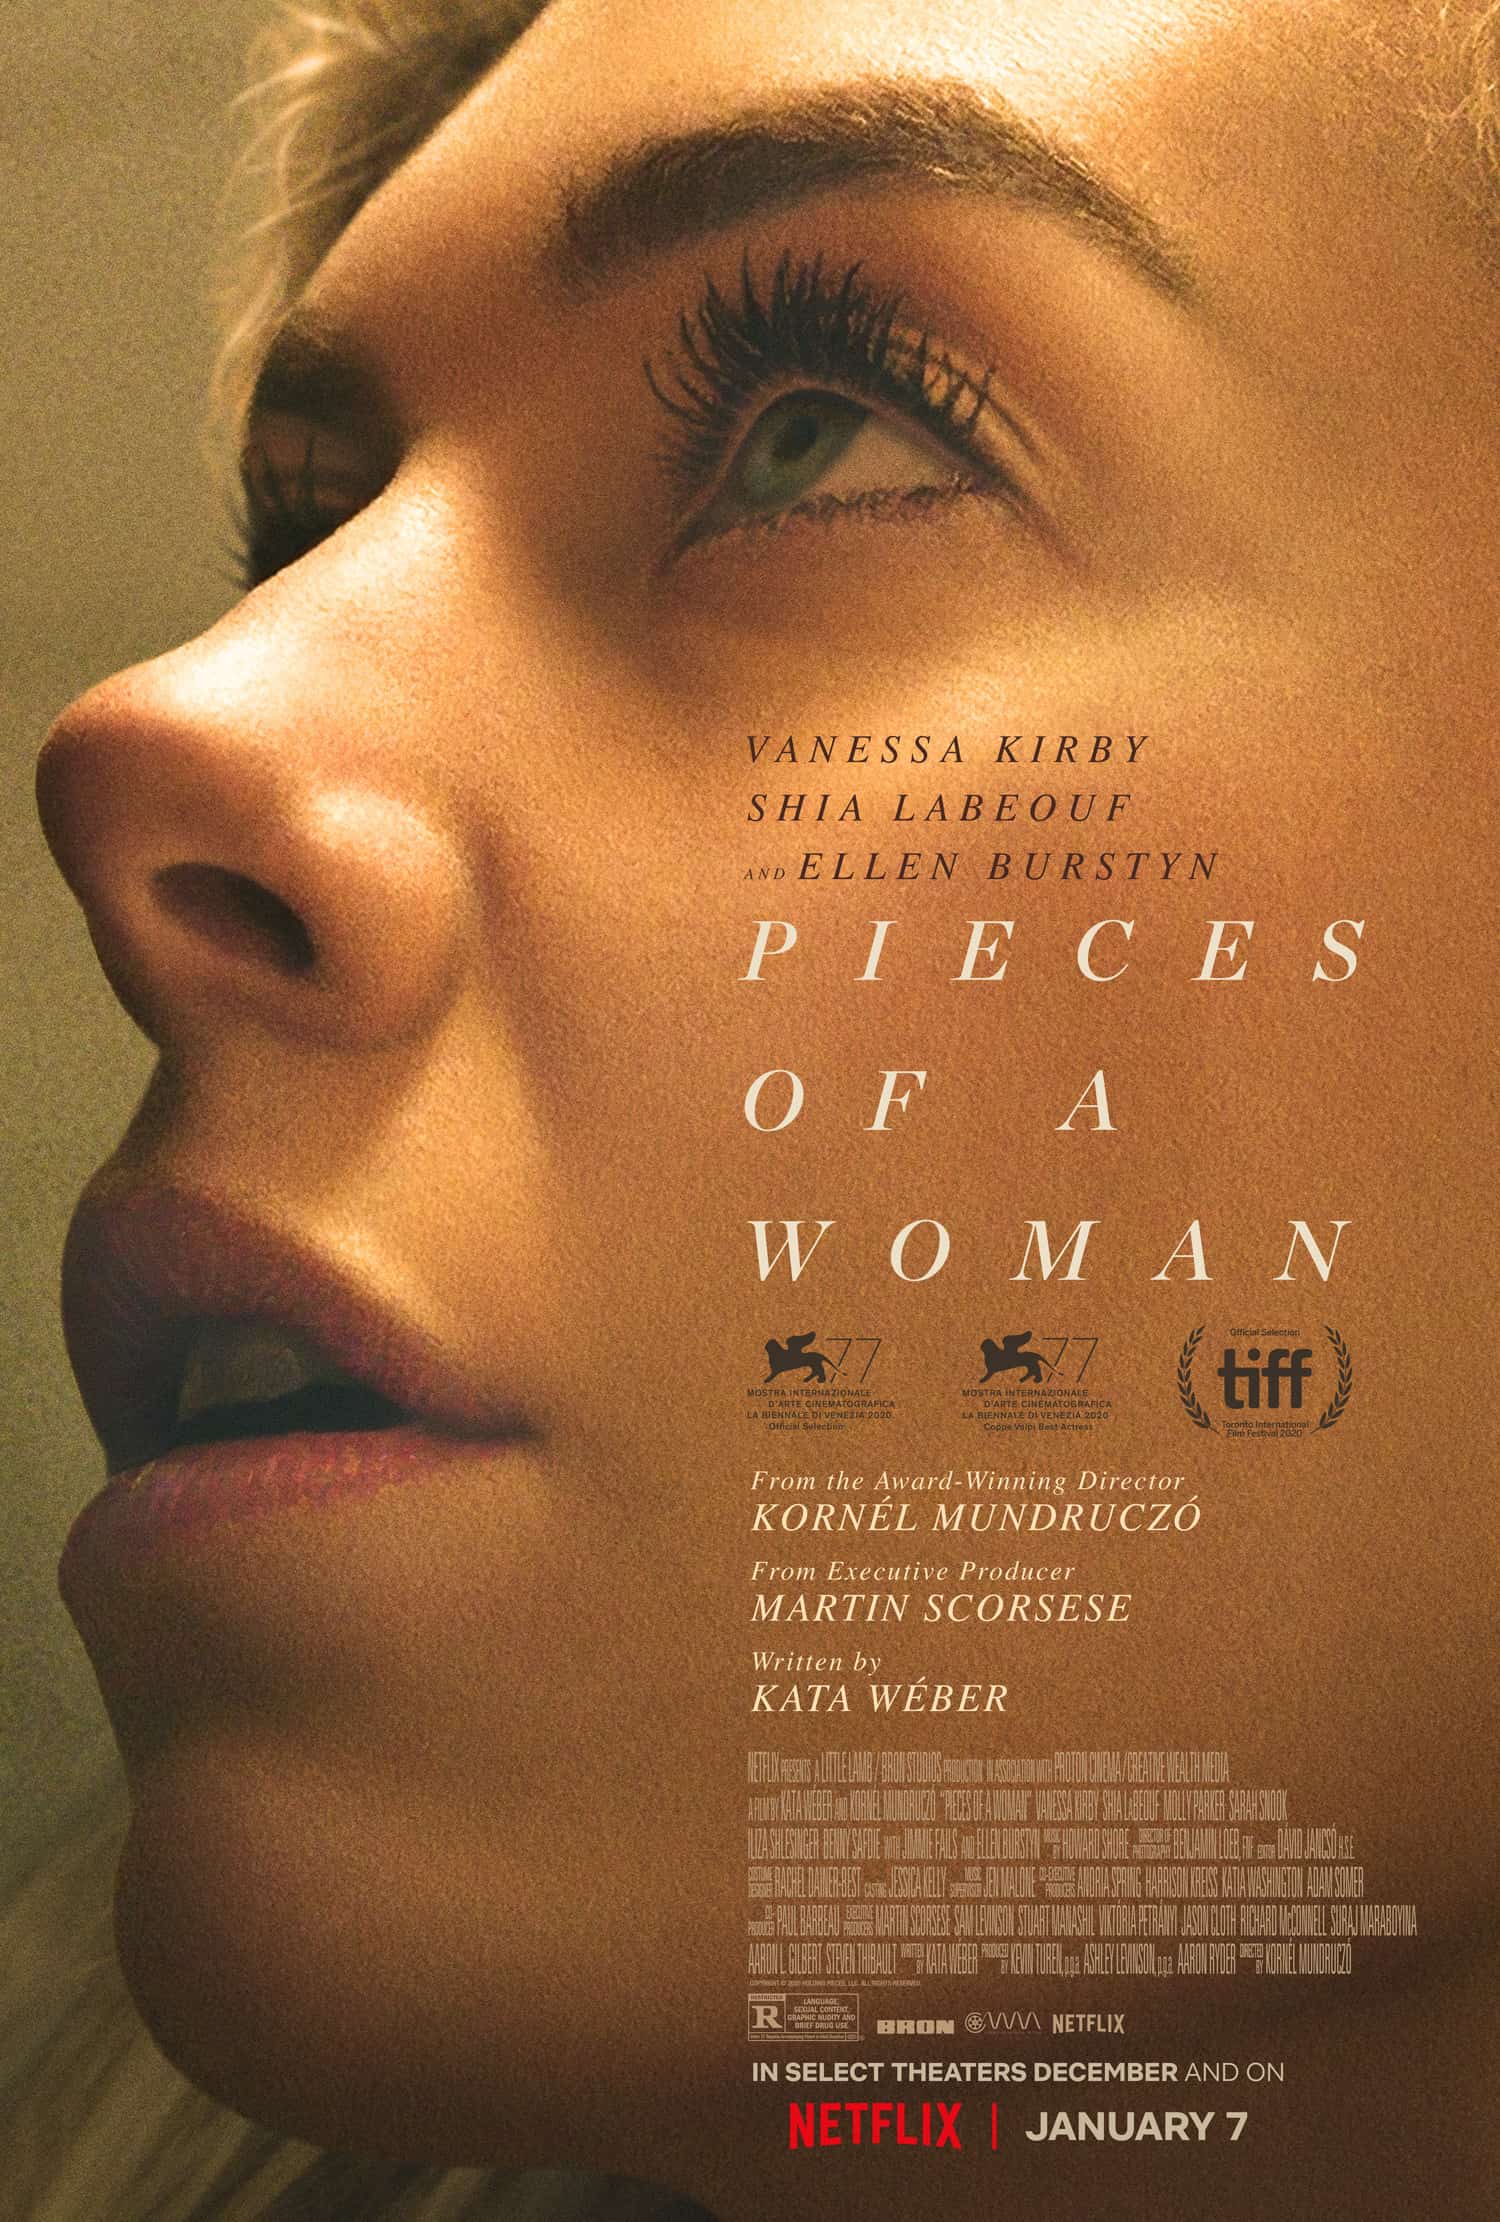 Pieces of A Woman | Vanessa Kirby für Netflix